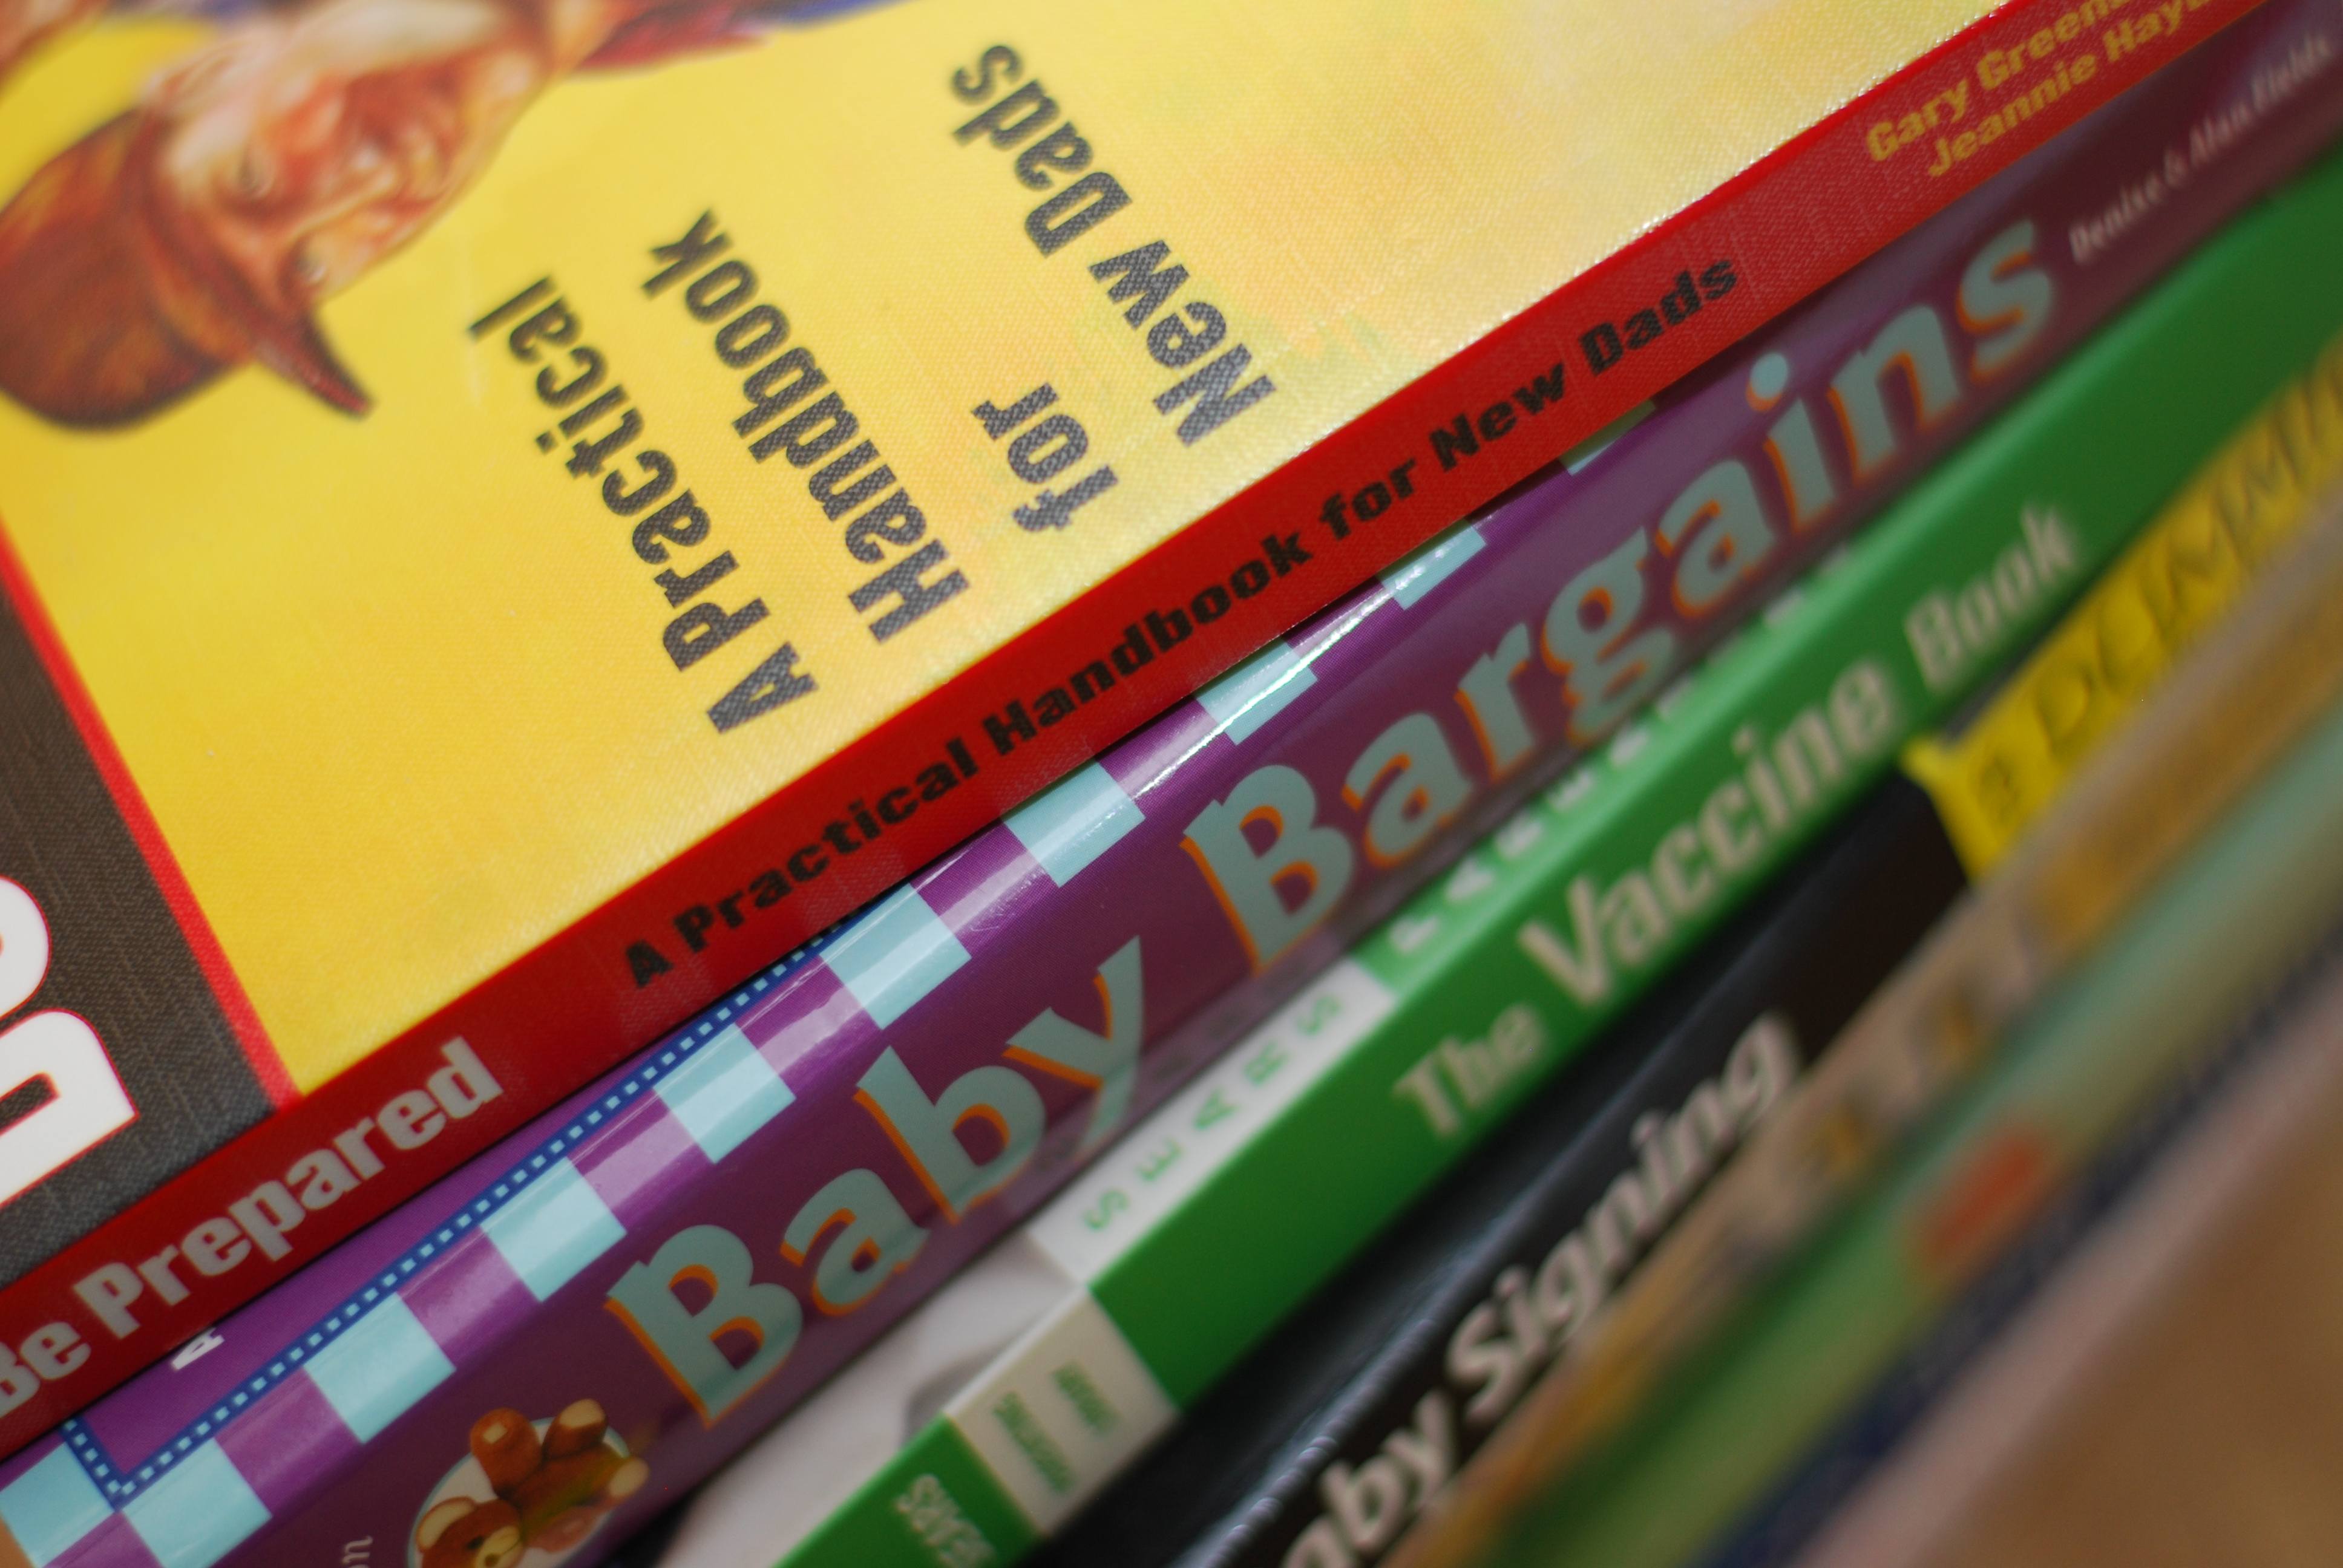 10 Important Parenting Books Every Parent Should Read